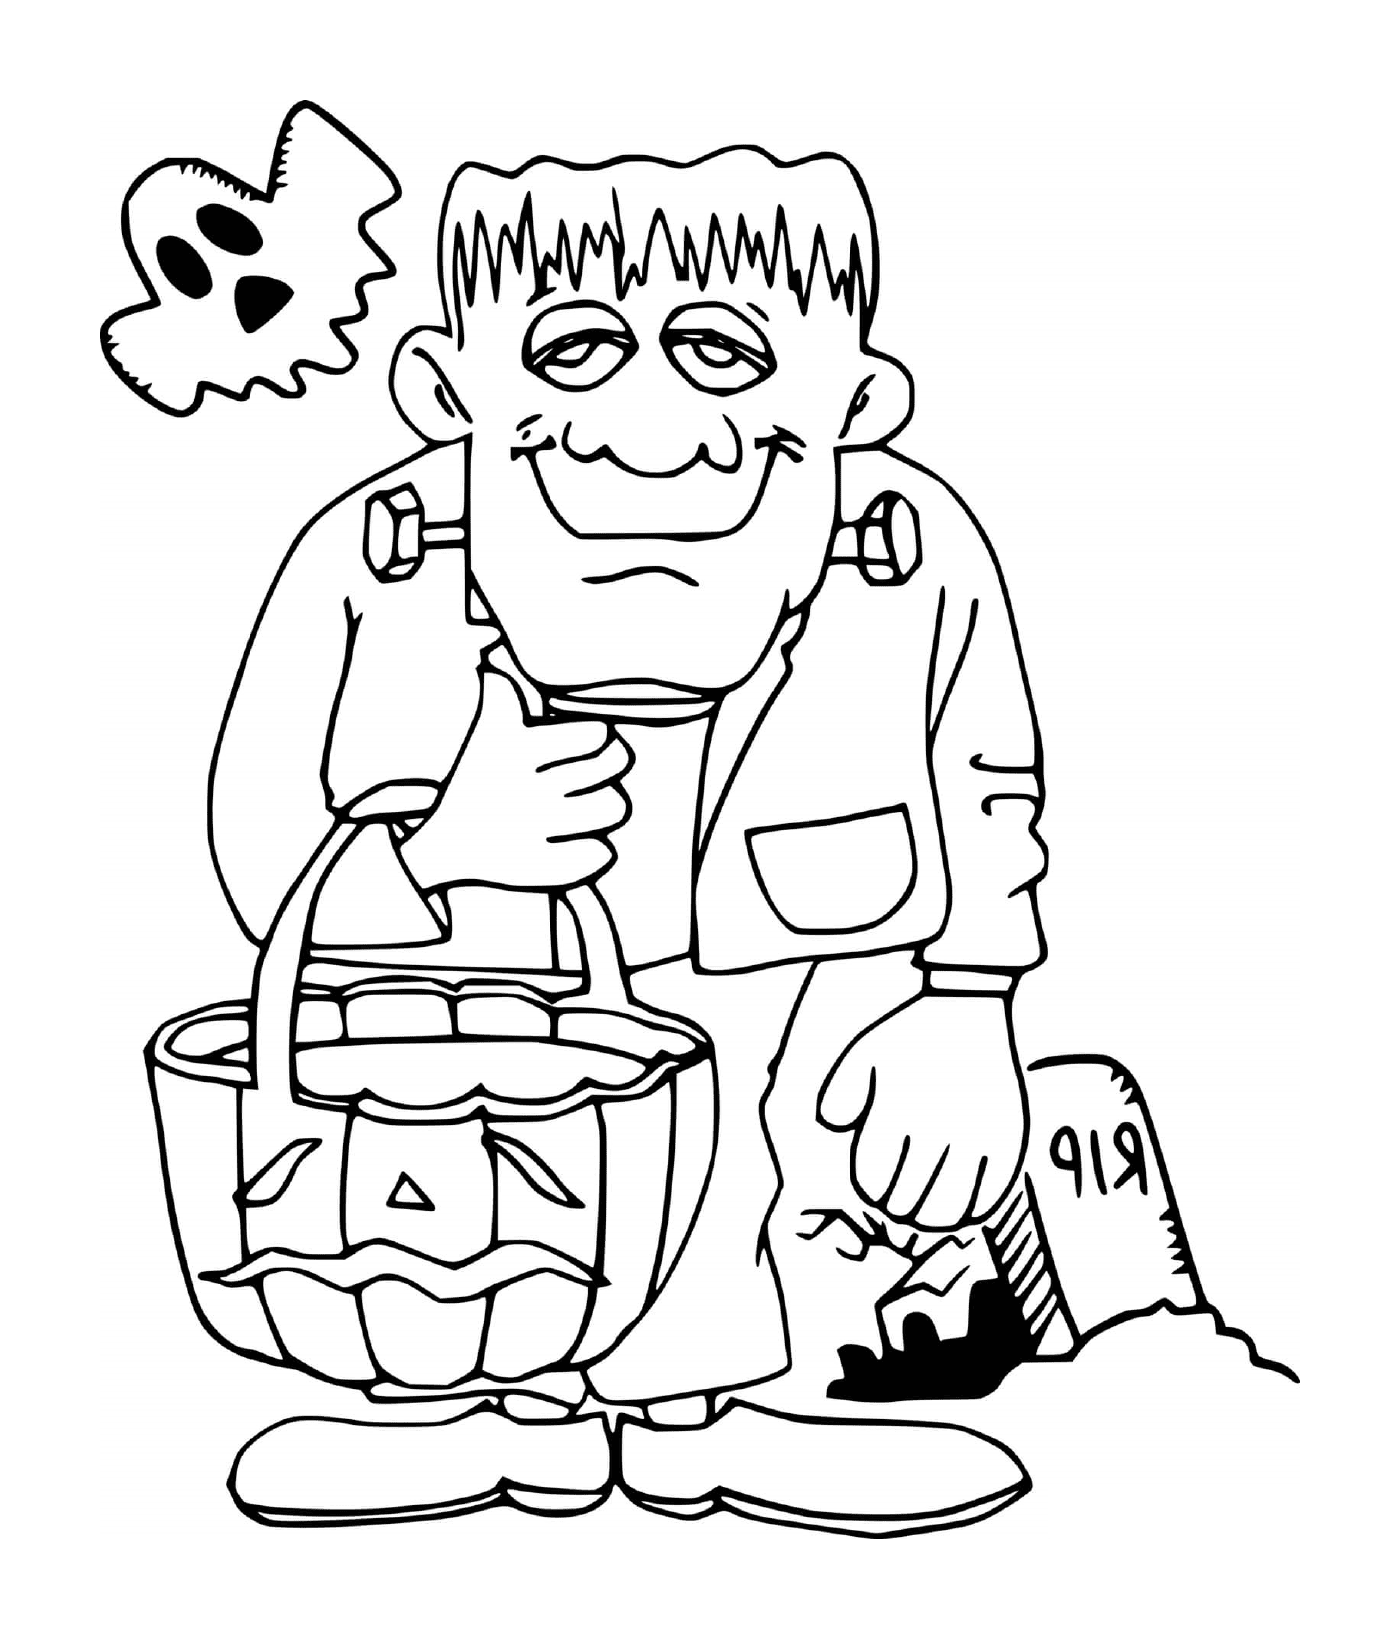   Frankenstein avec un fantôme 